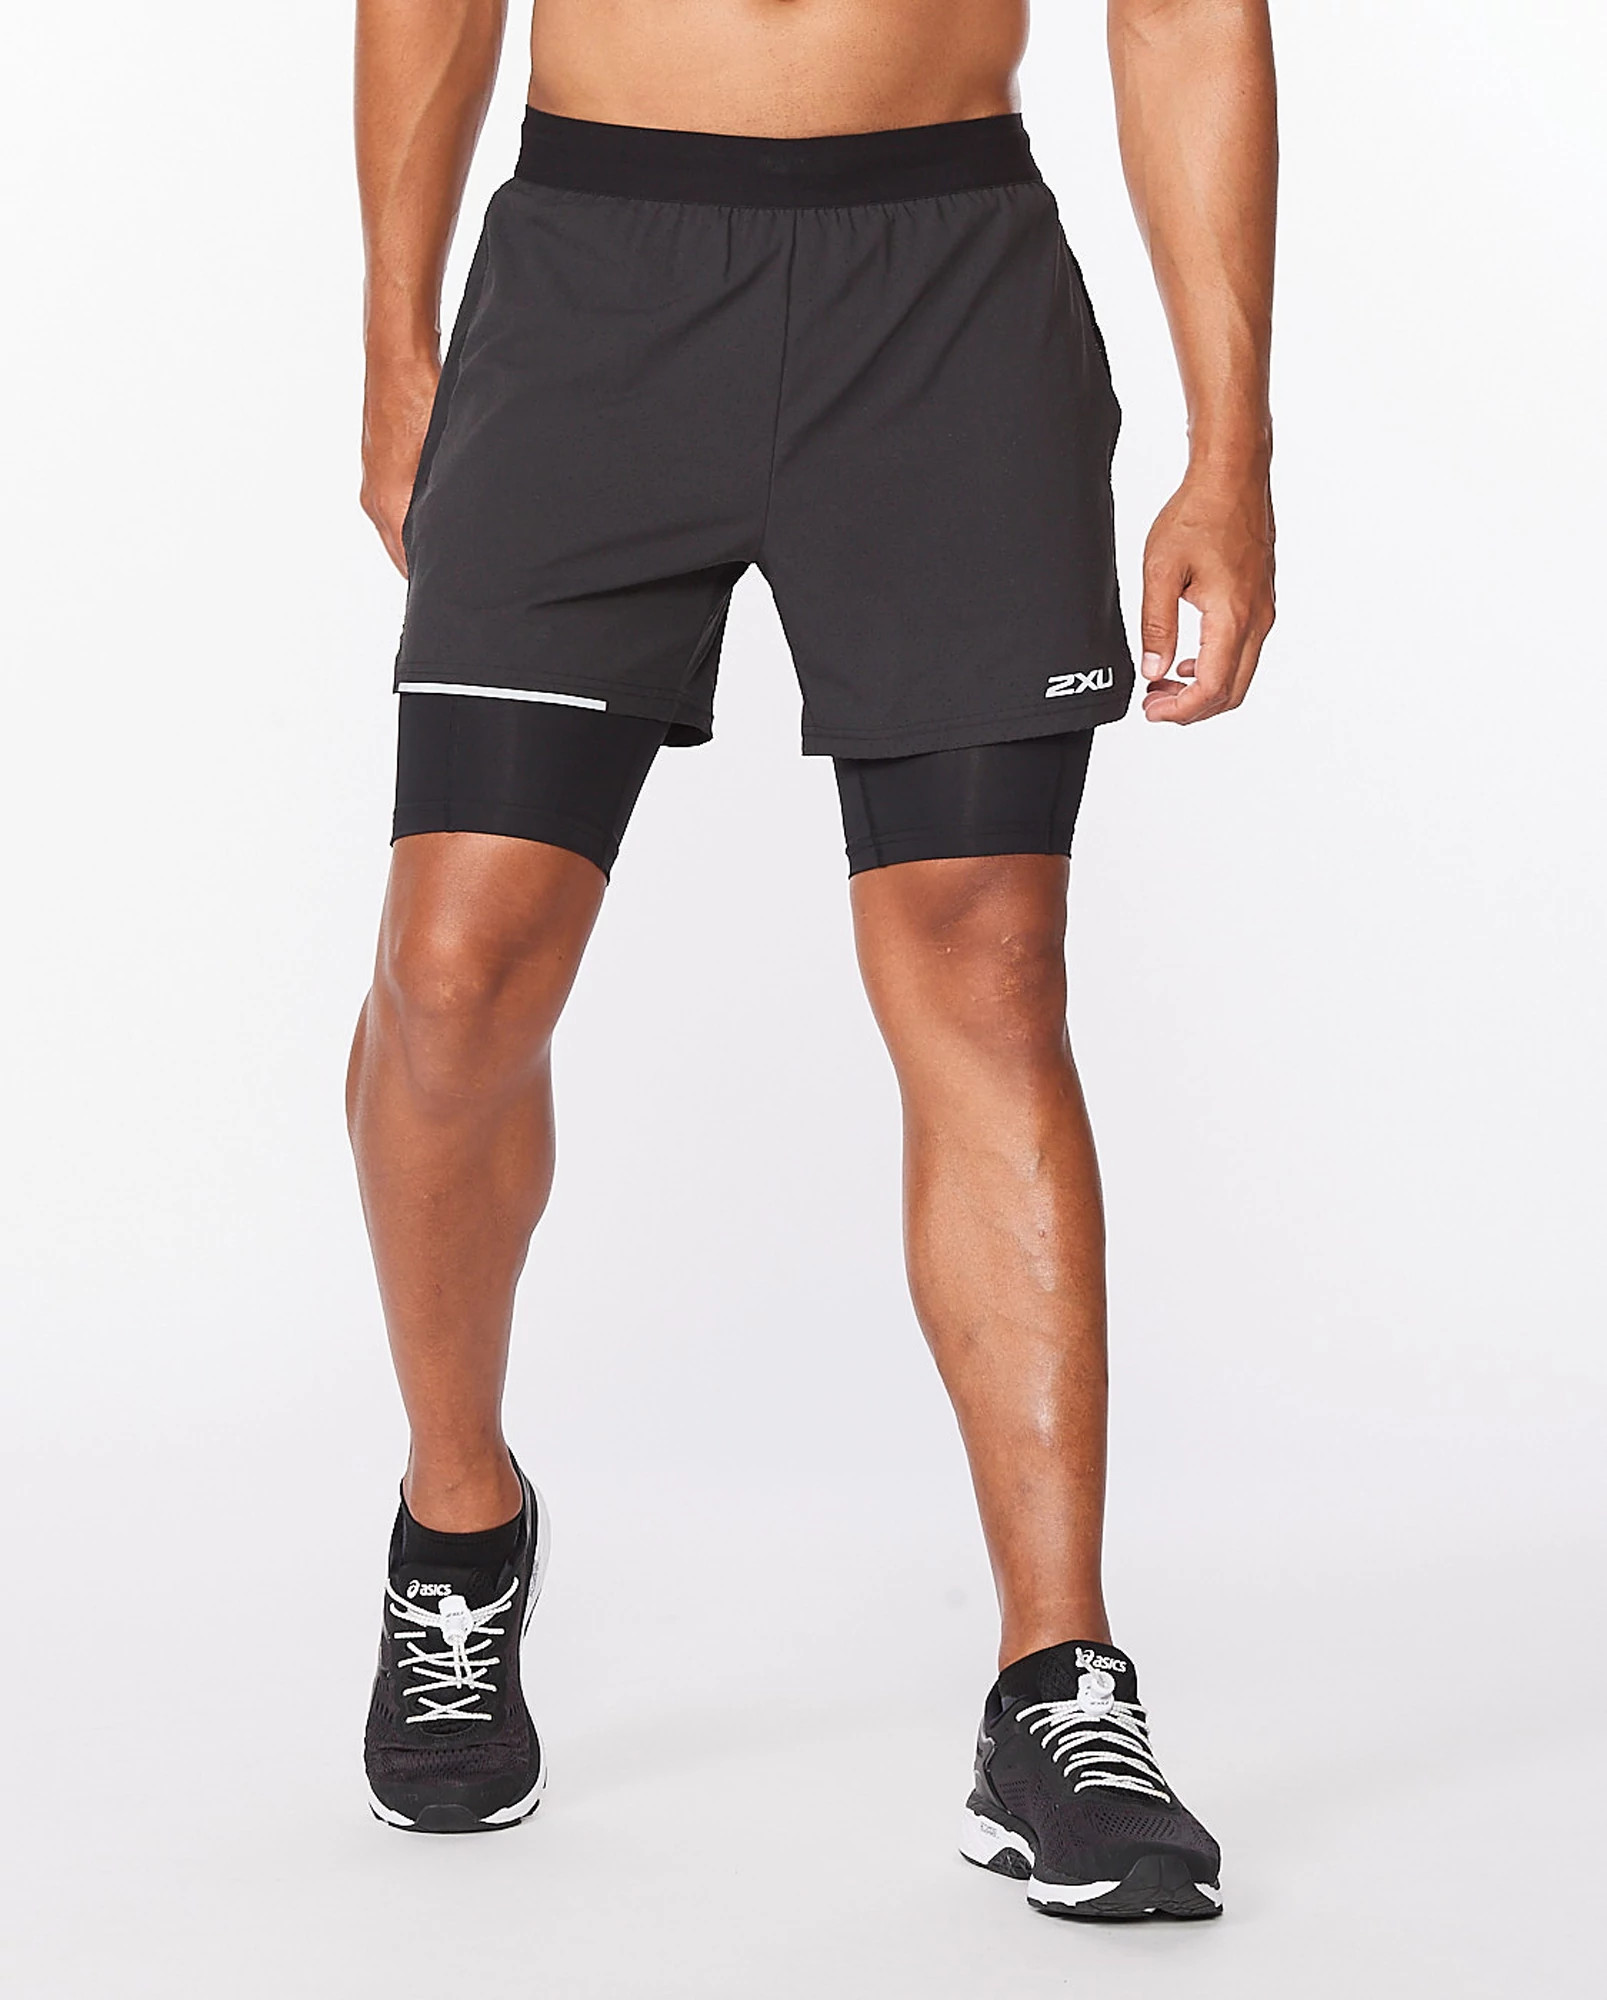 2xu 2 in 1 shorts size xl ￡6.55 thenationalherald.com